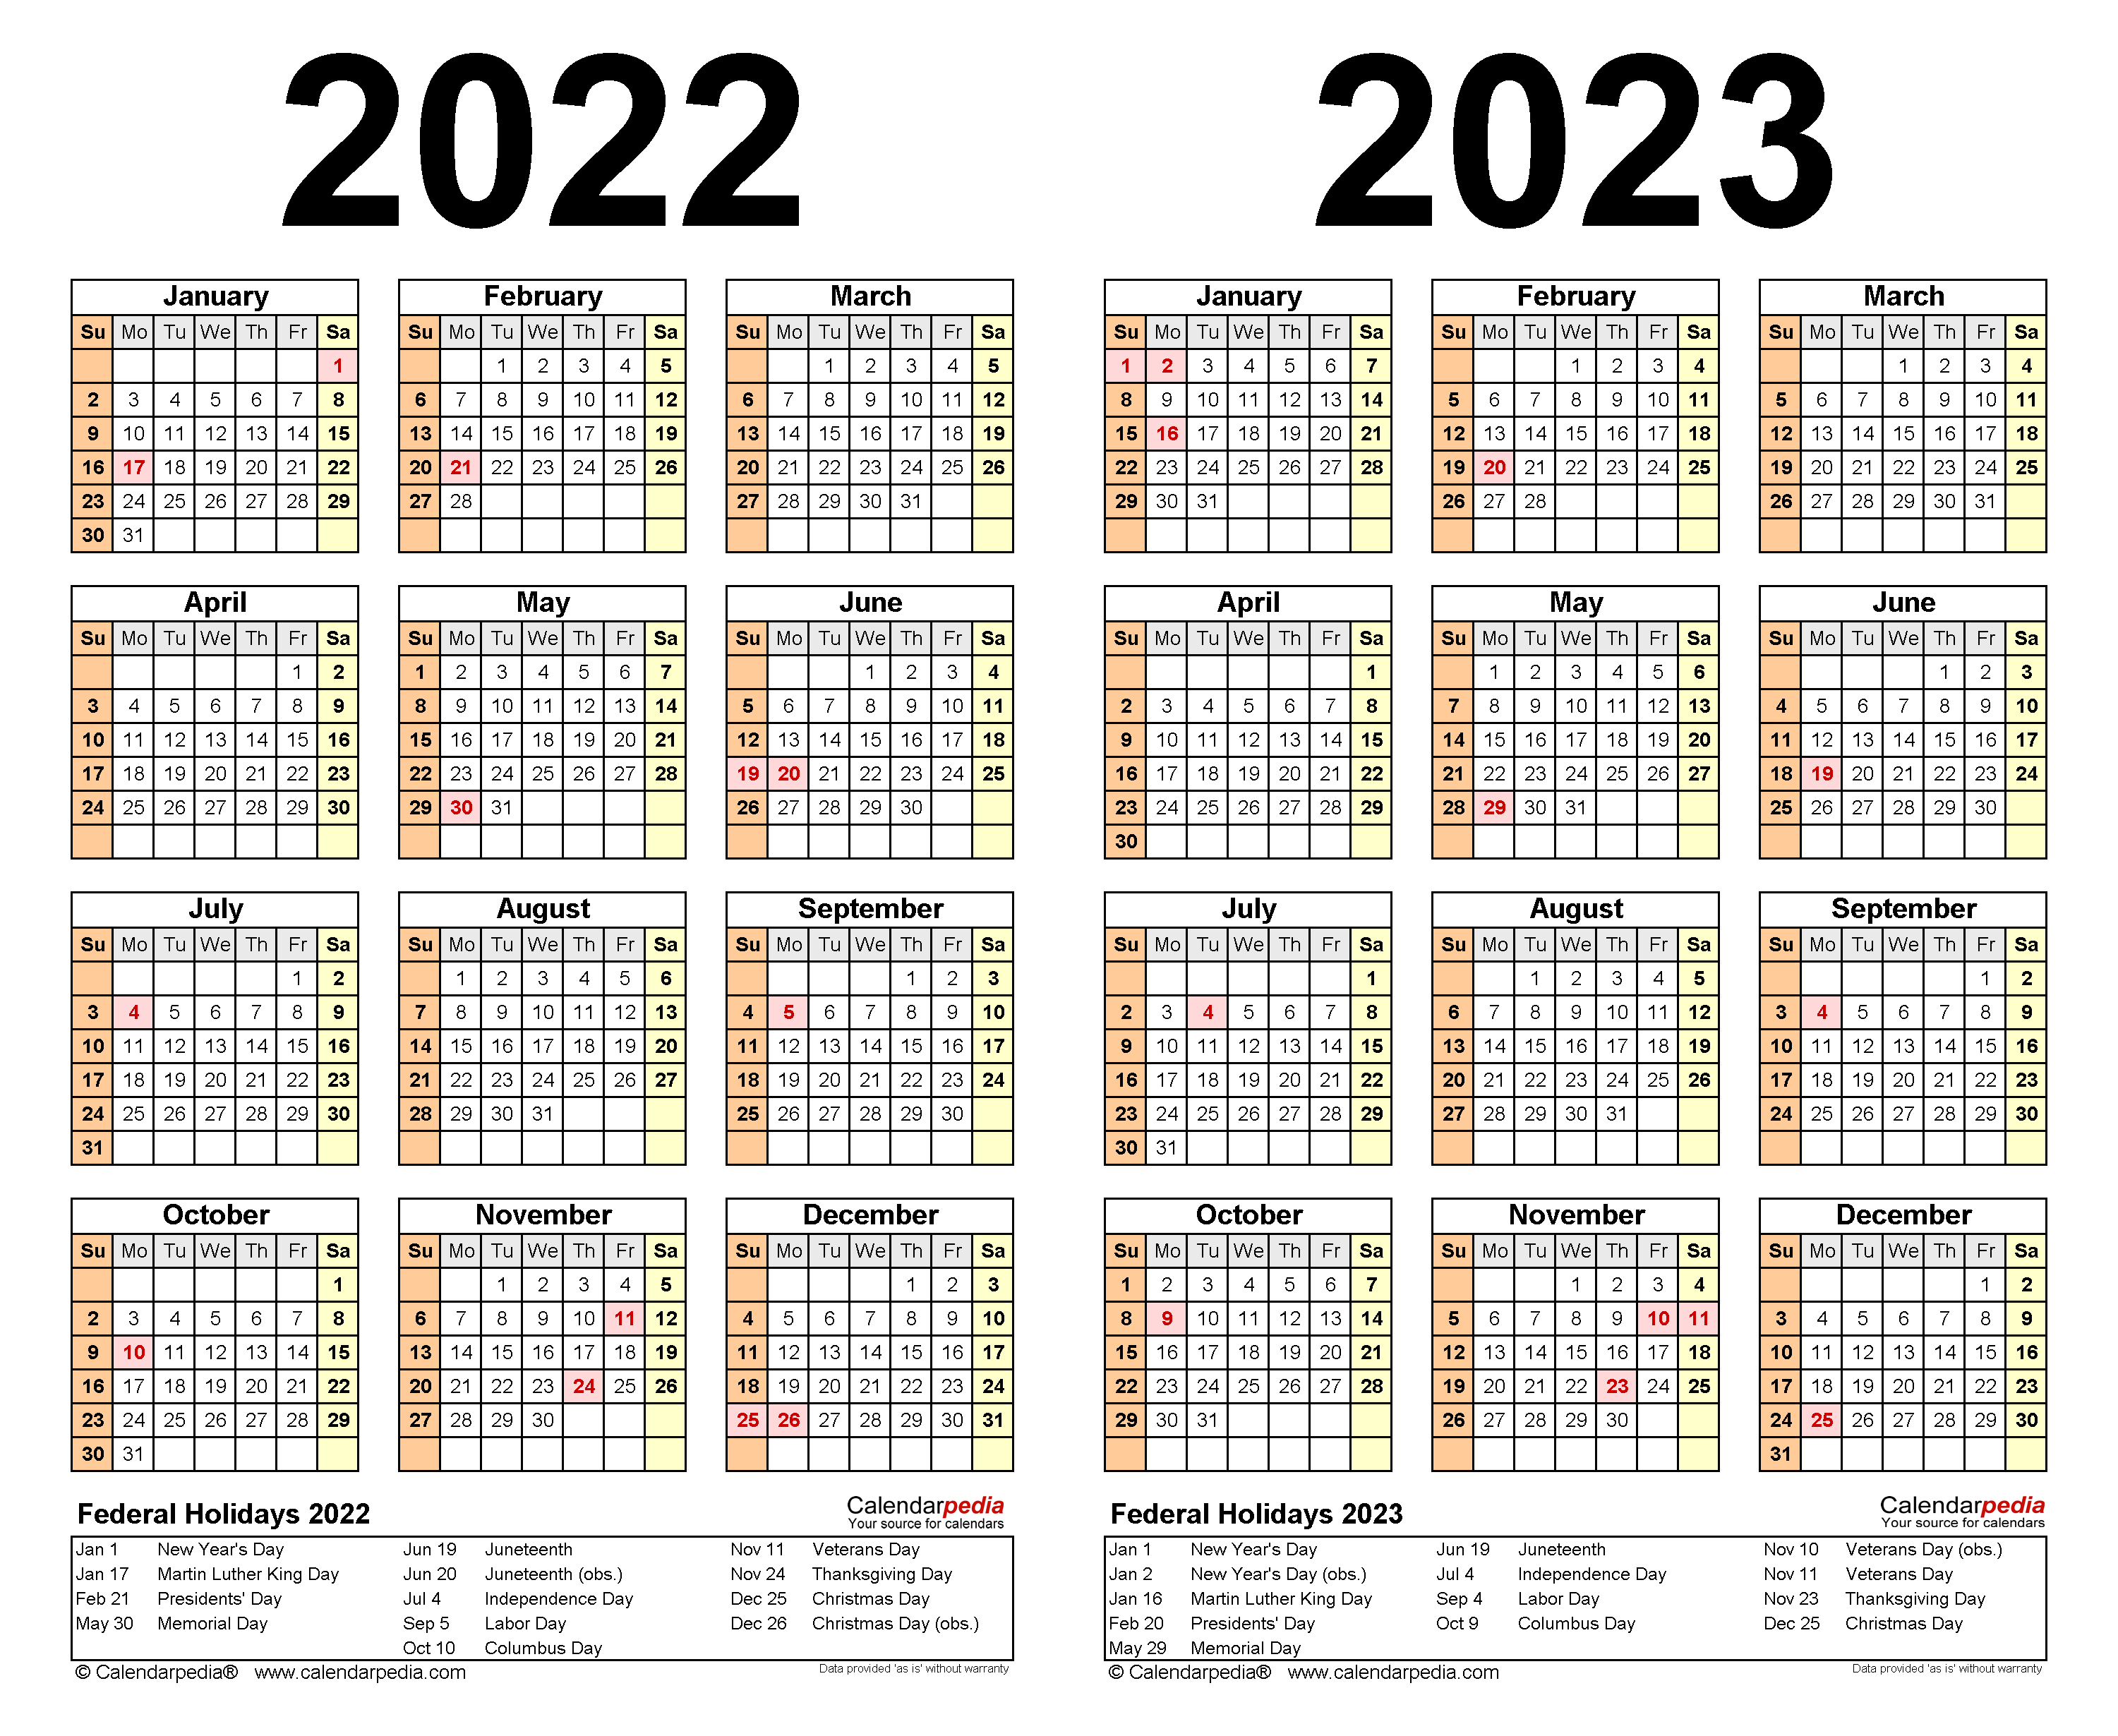 ottawa-university-academic-calendar-2022-2023-calendar2023